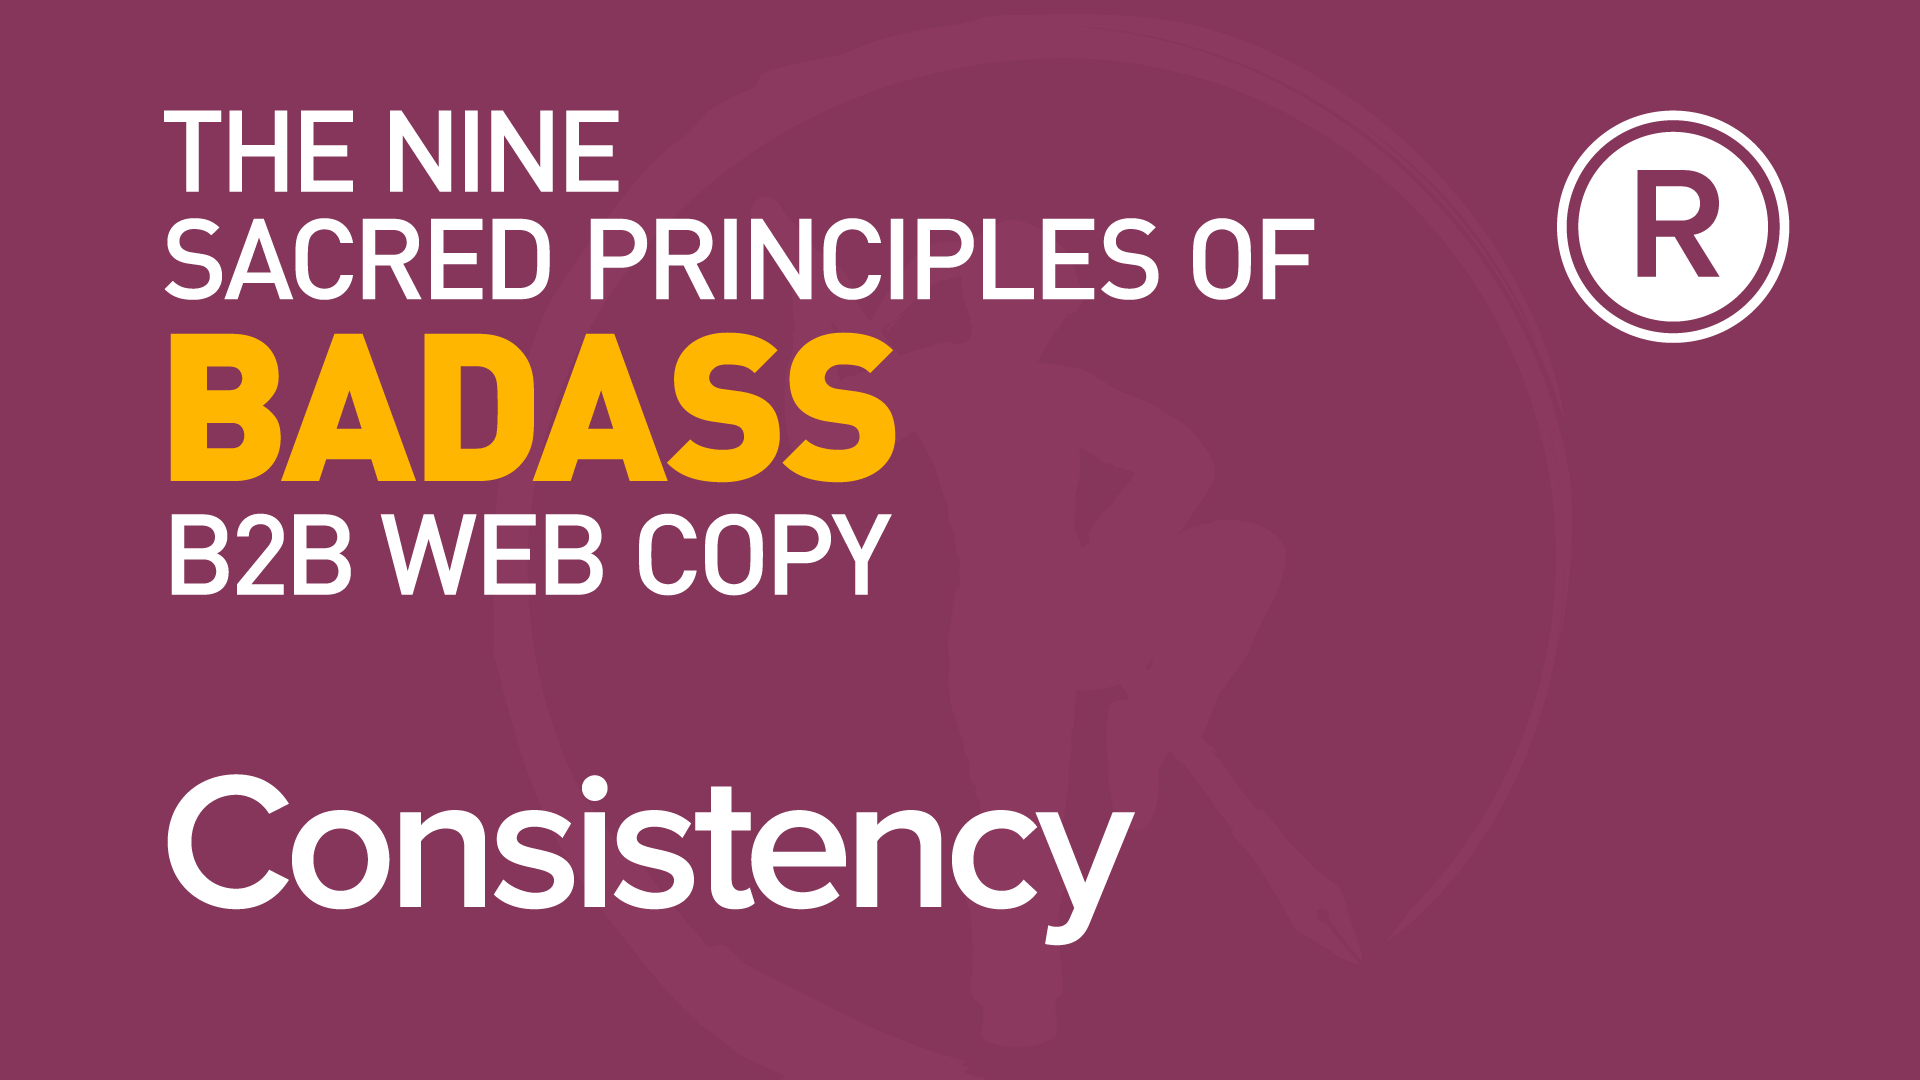 7th principle of badass B2B web copy: Consistency